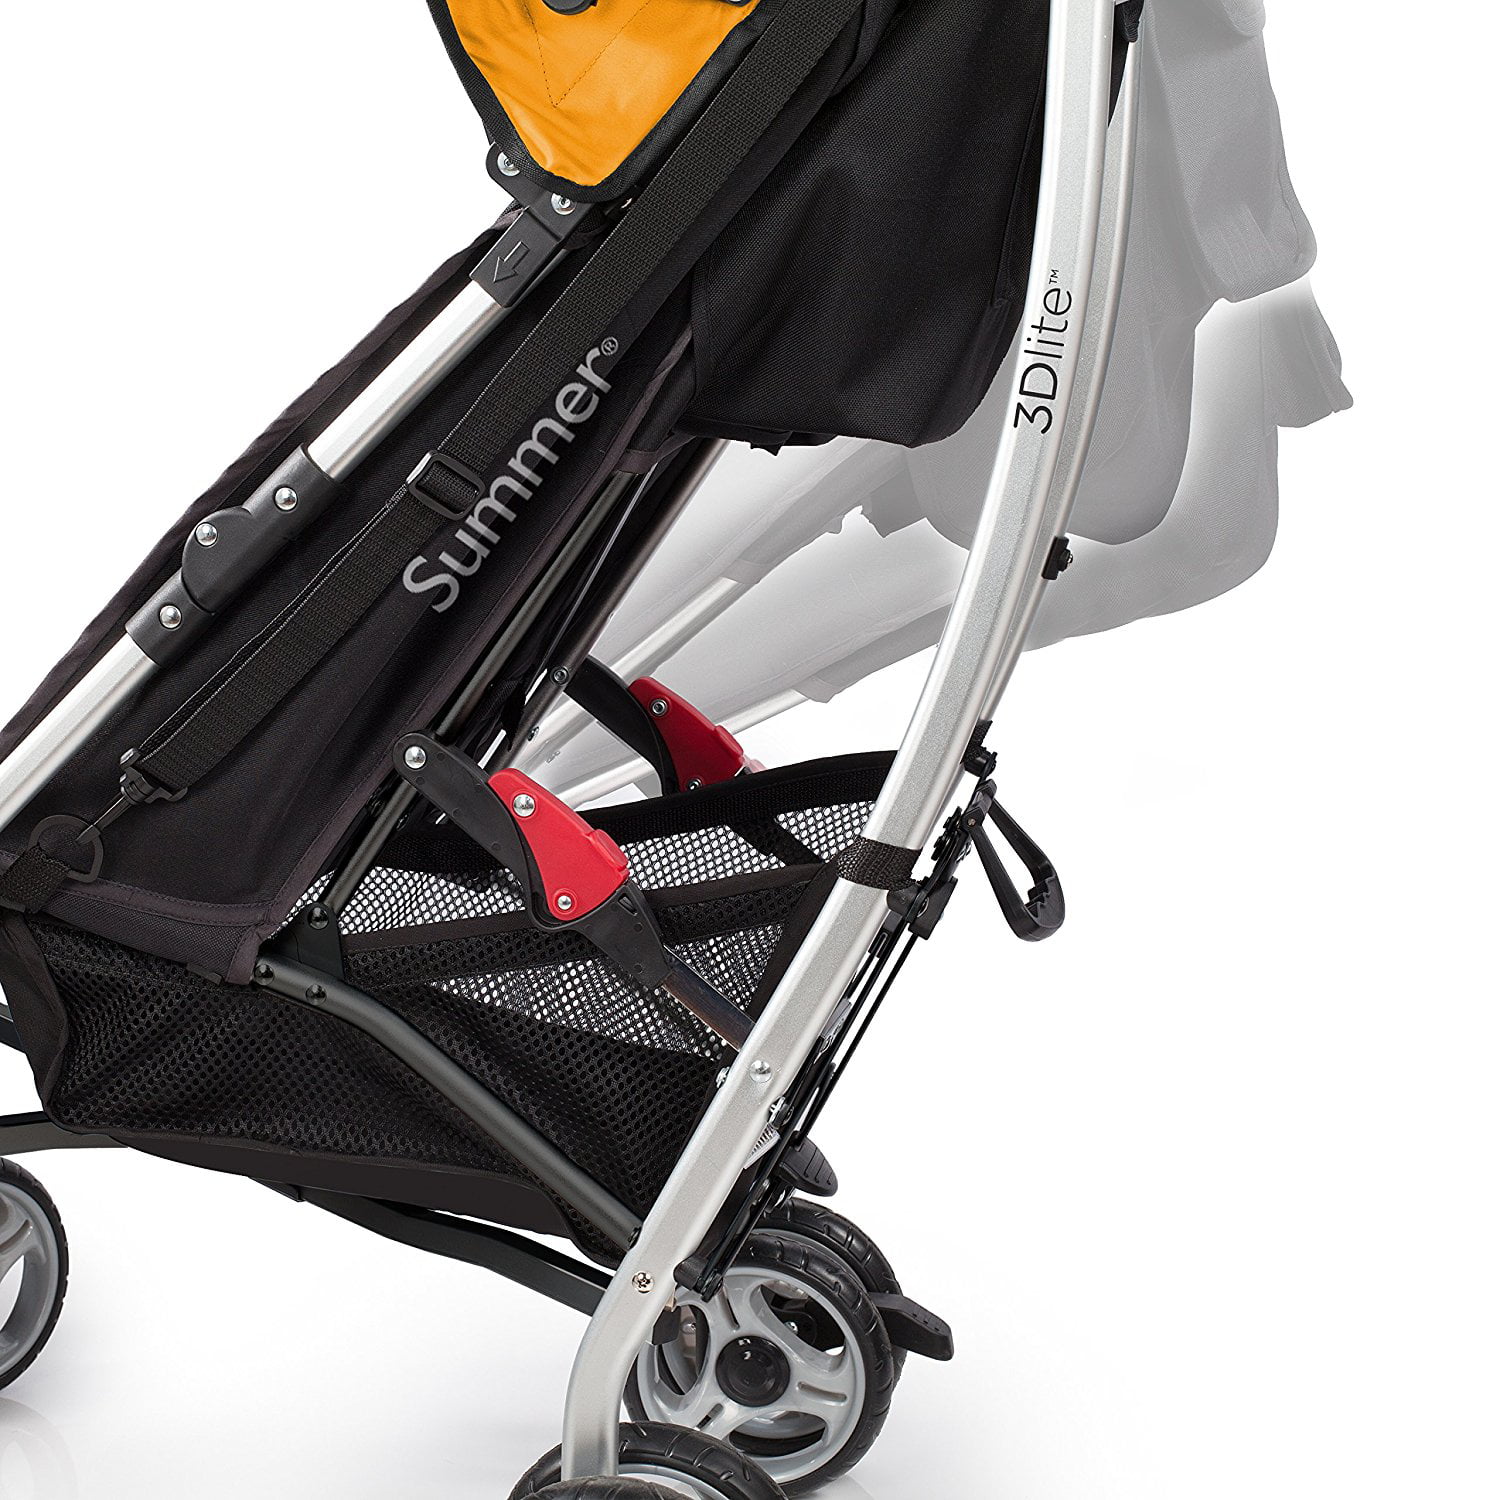 summer infant 3d lite stroller accessories